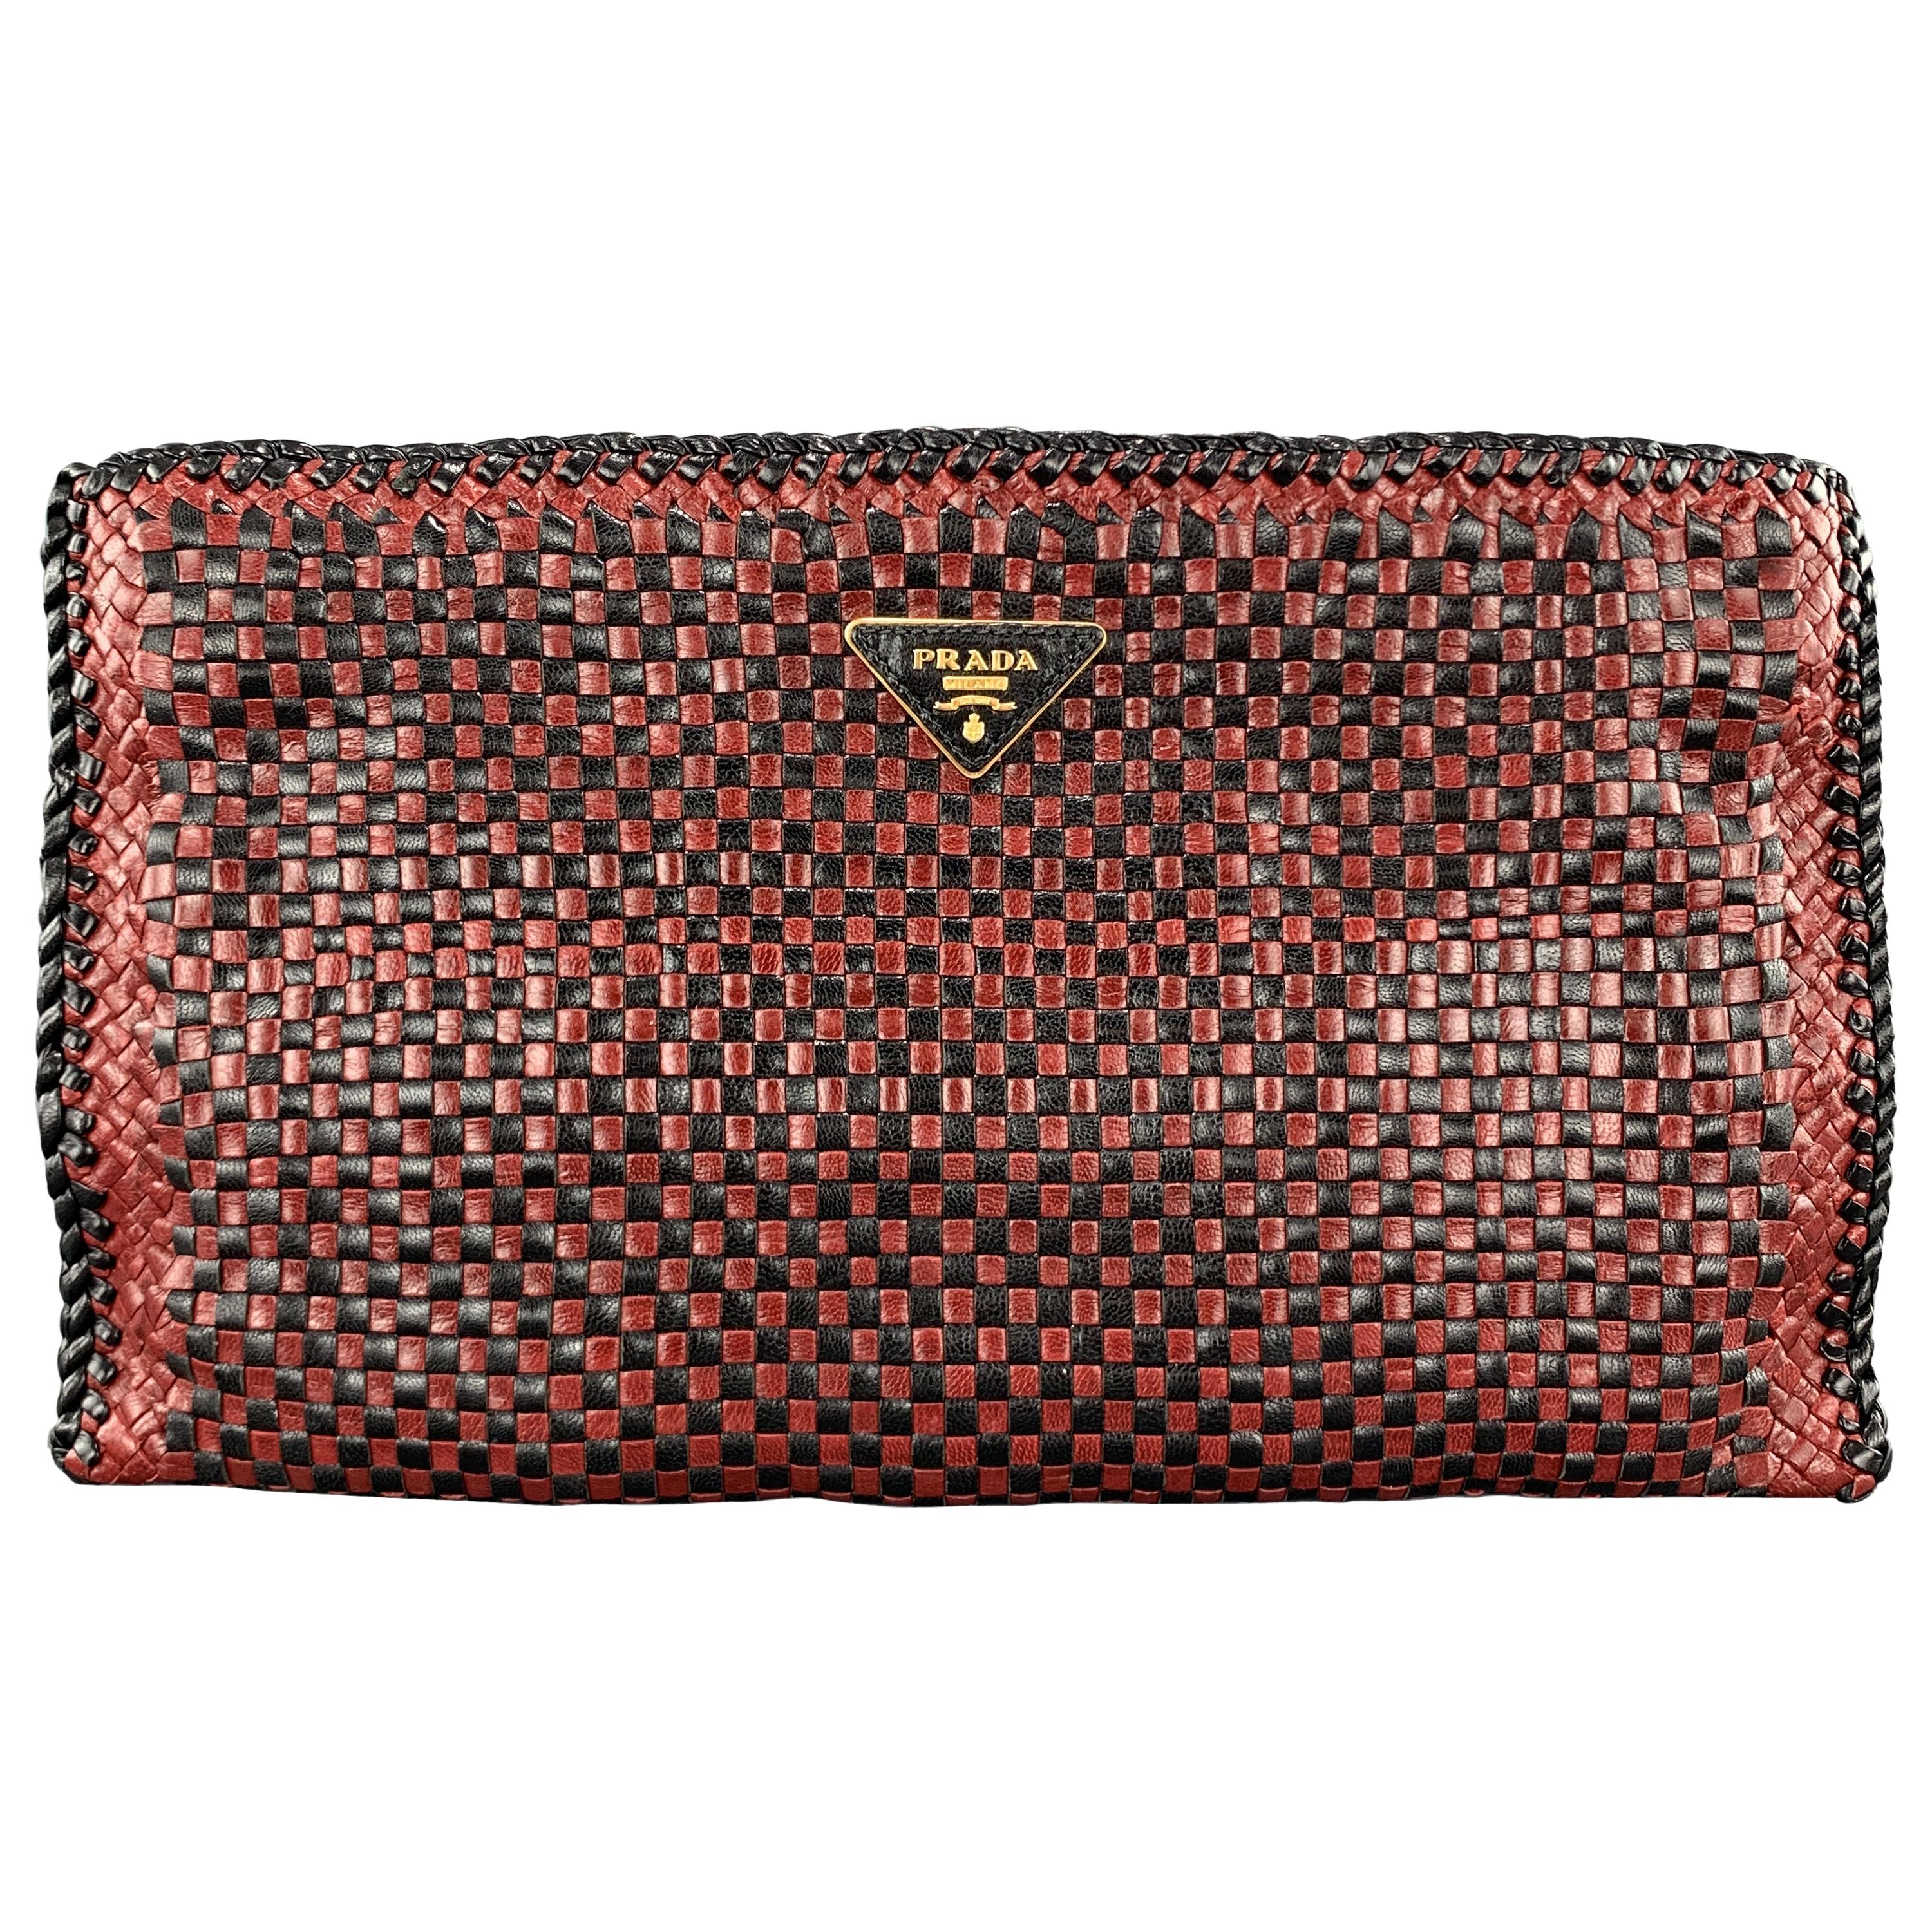 PRADA Red & Black CHeckered Woven Leather Clutch Handbag